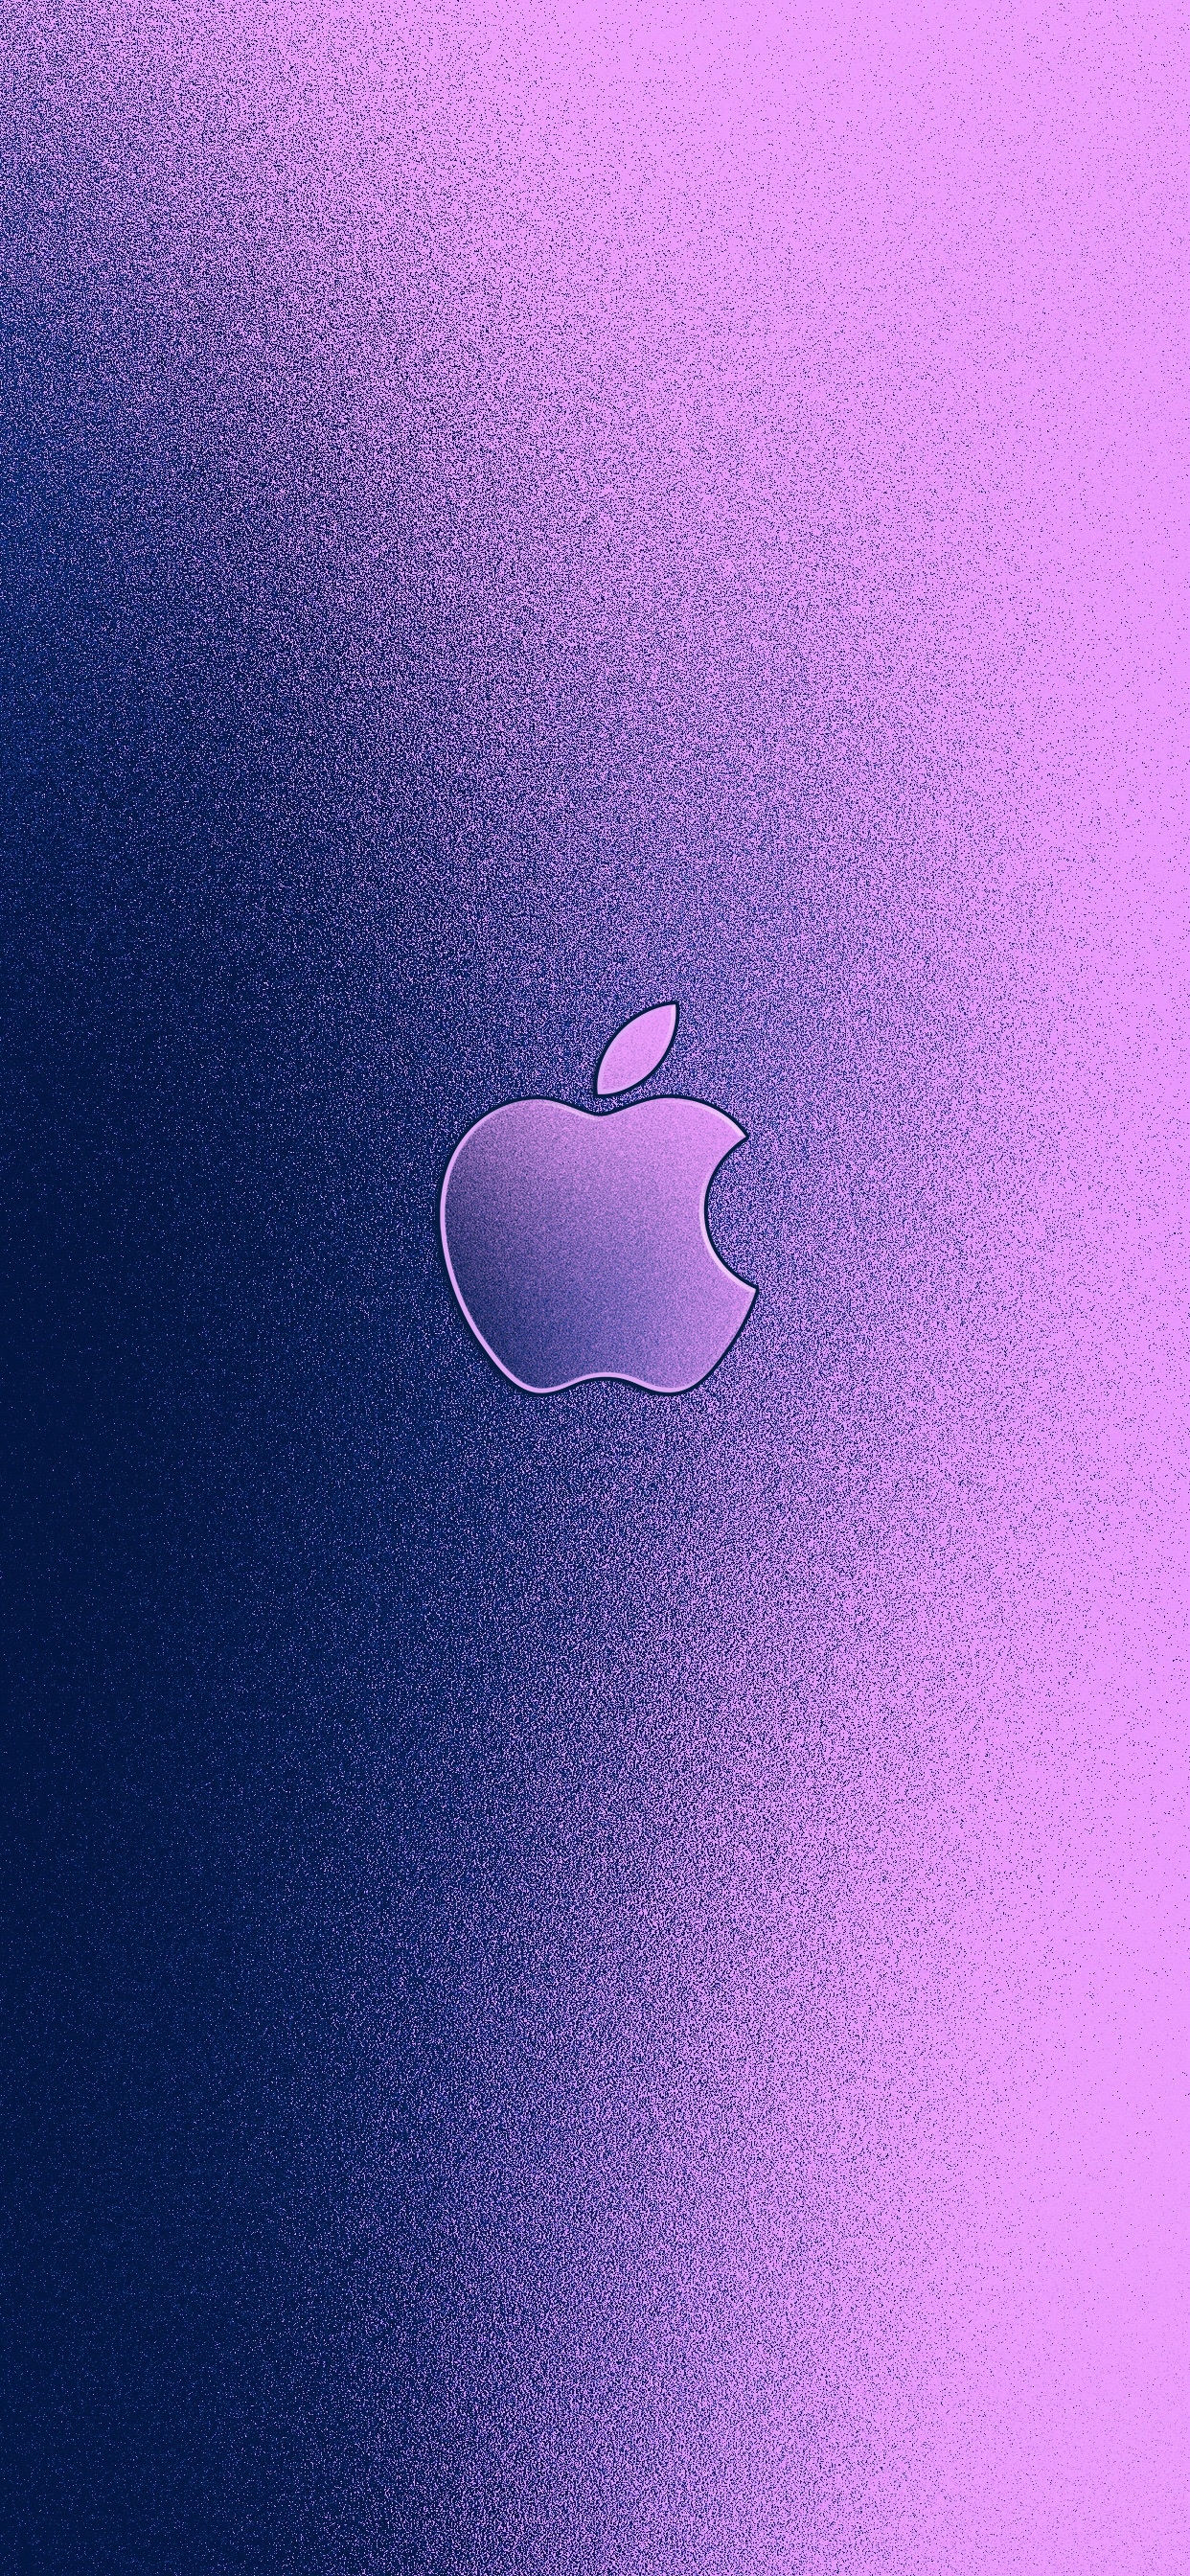 Aluminum Apple logo wallpaper for iPhone